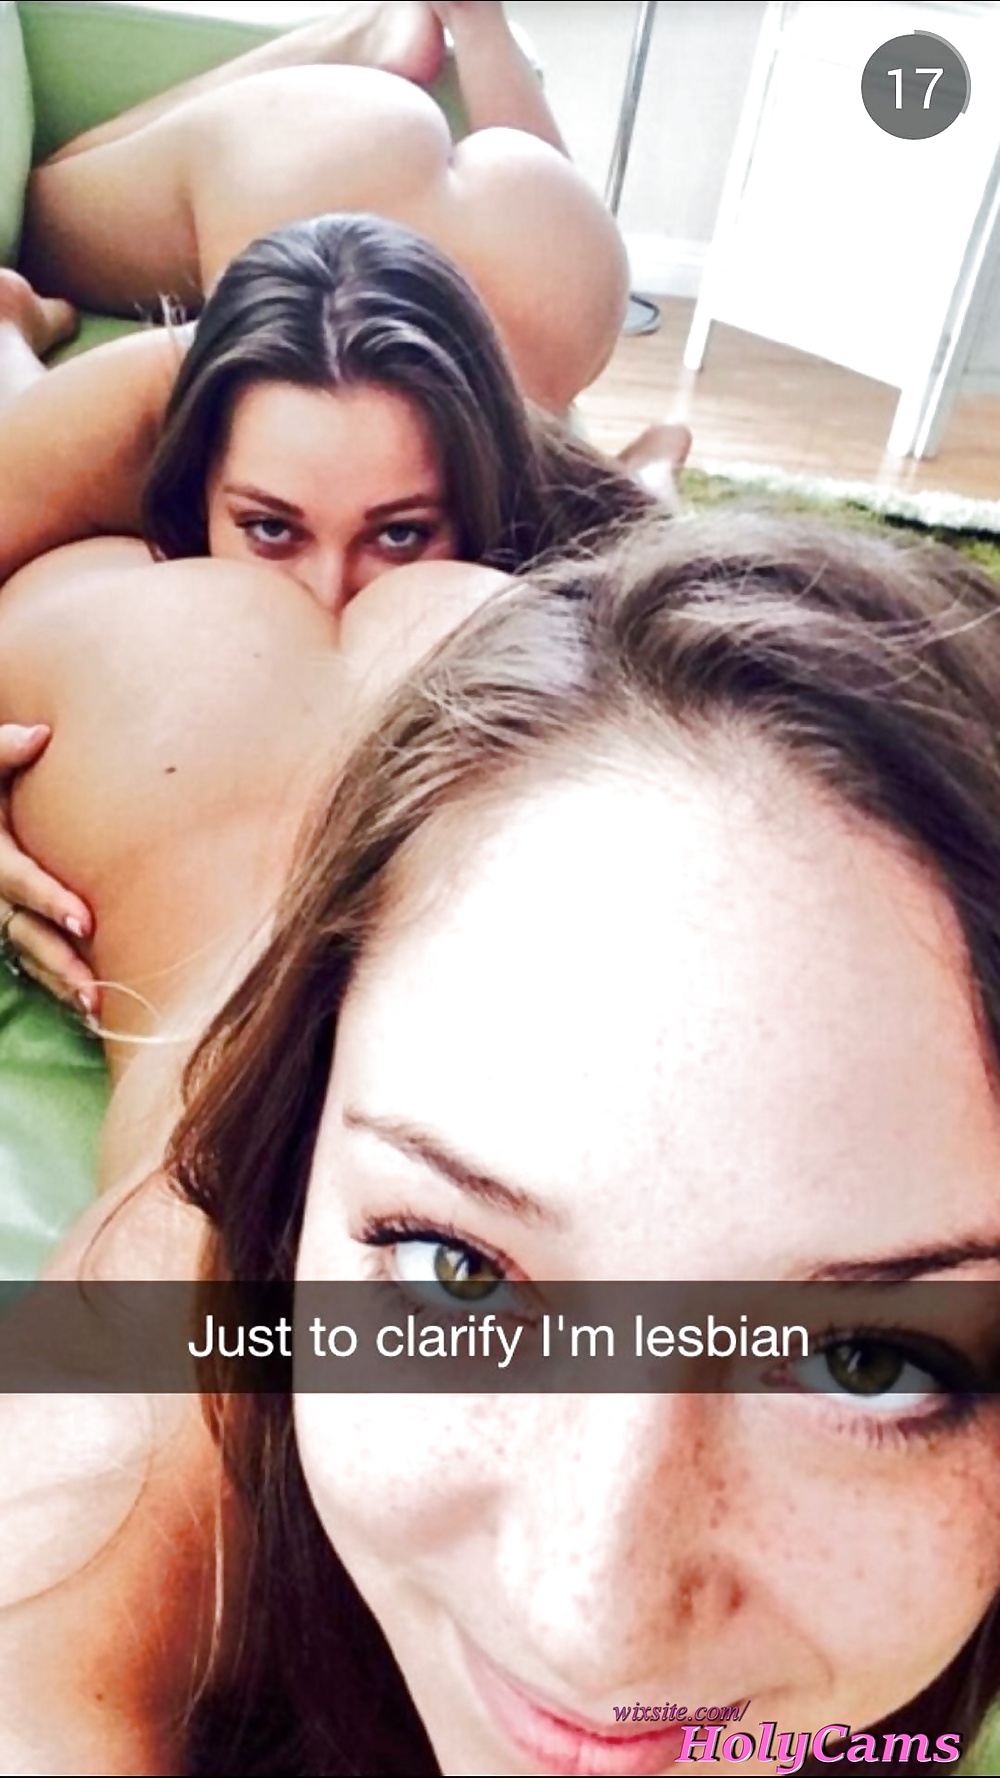 Snapchat exposed sluts (3/15) .